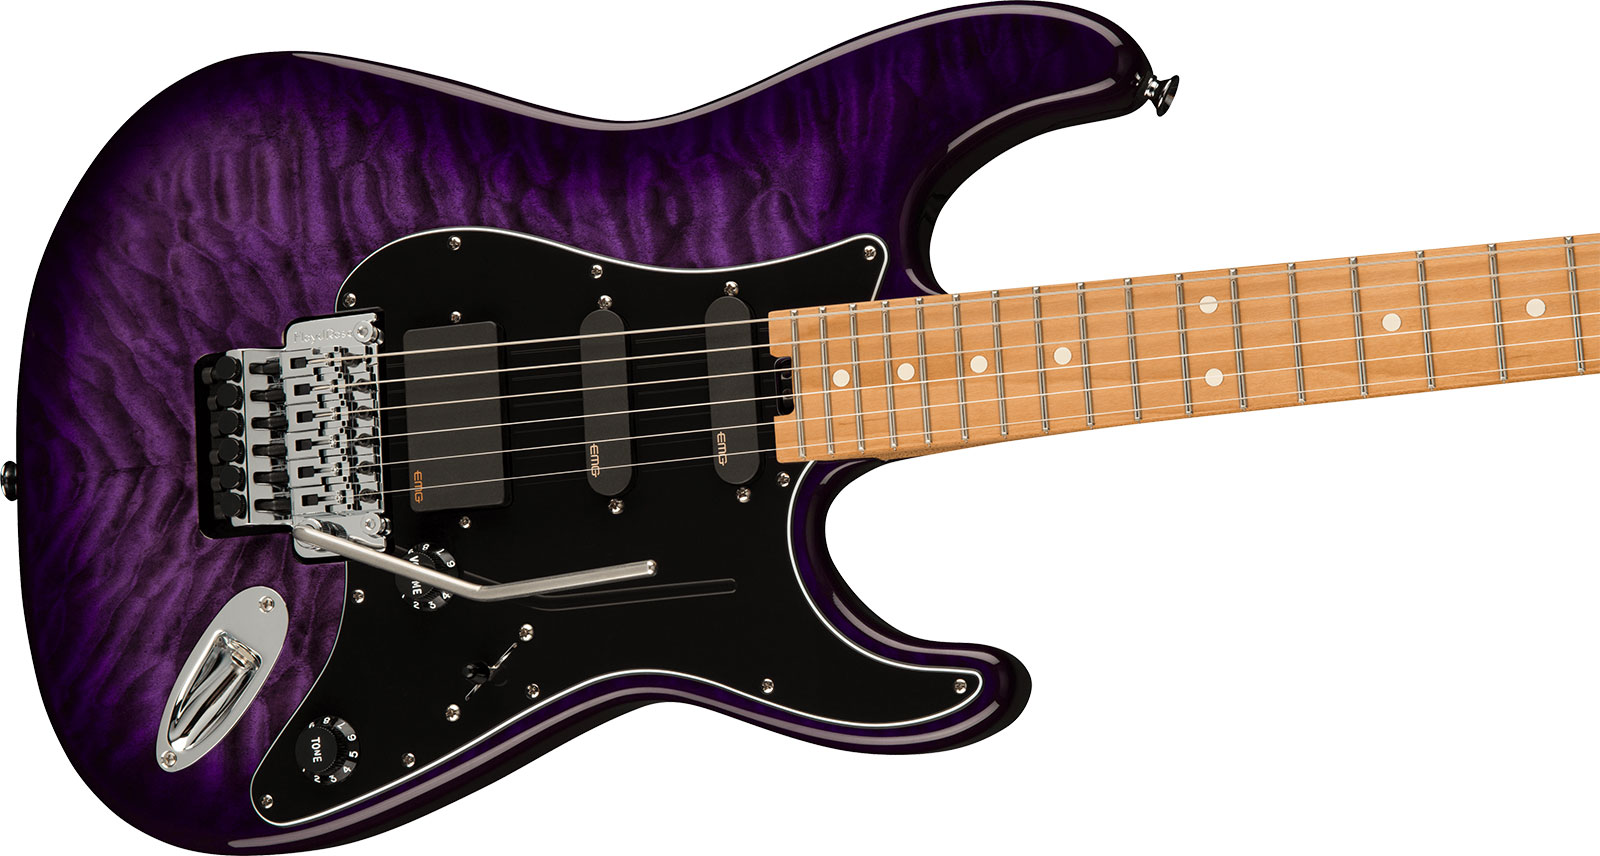 Charvel Marco Sfogli So Cal Style 1 Pro Mod Signature Hss Emg Fr Mn - Transparent Purple Burst - Guitarra eléctrica de autor - Variation 2